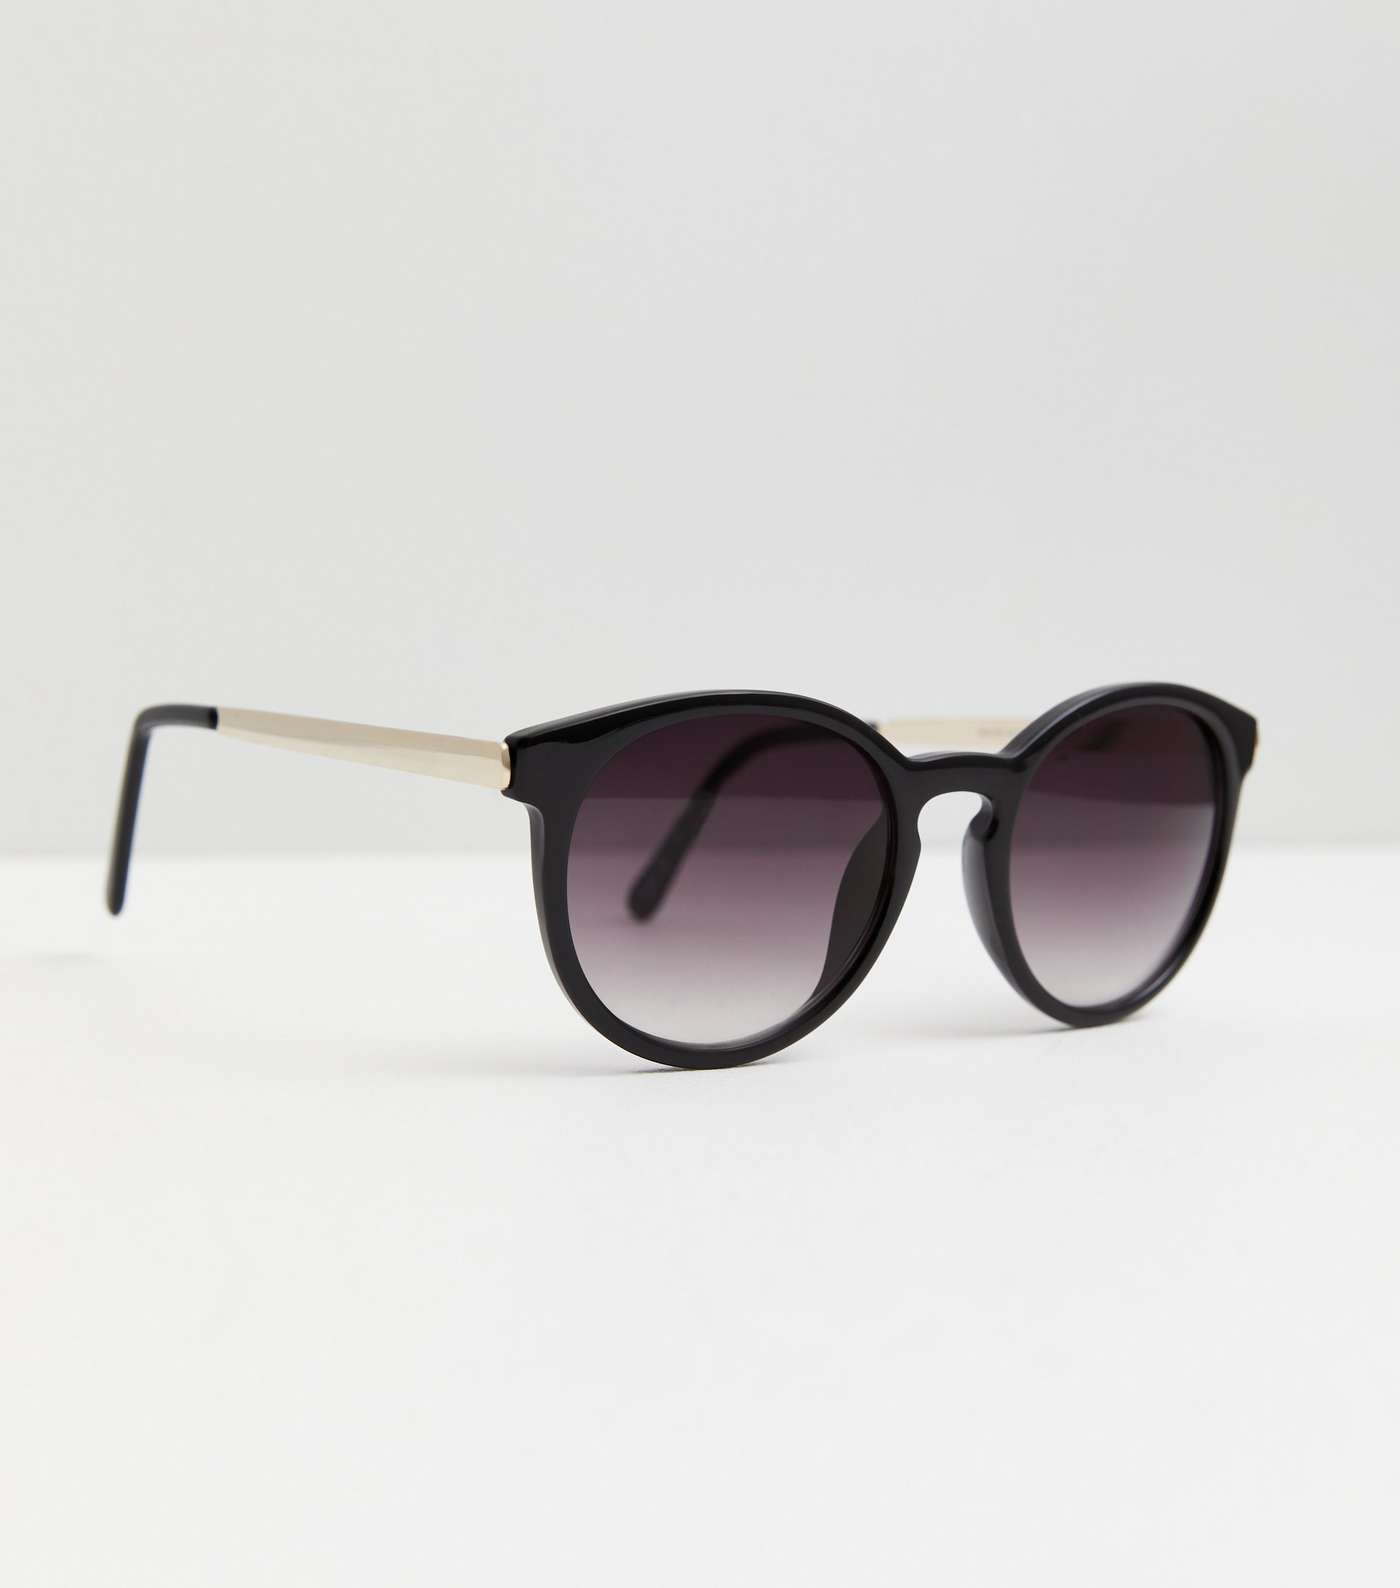 2 Pack Black and Tortoiseshell Effect Round Sunglasses Image 2